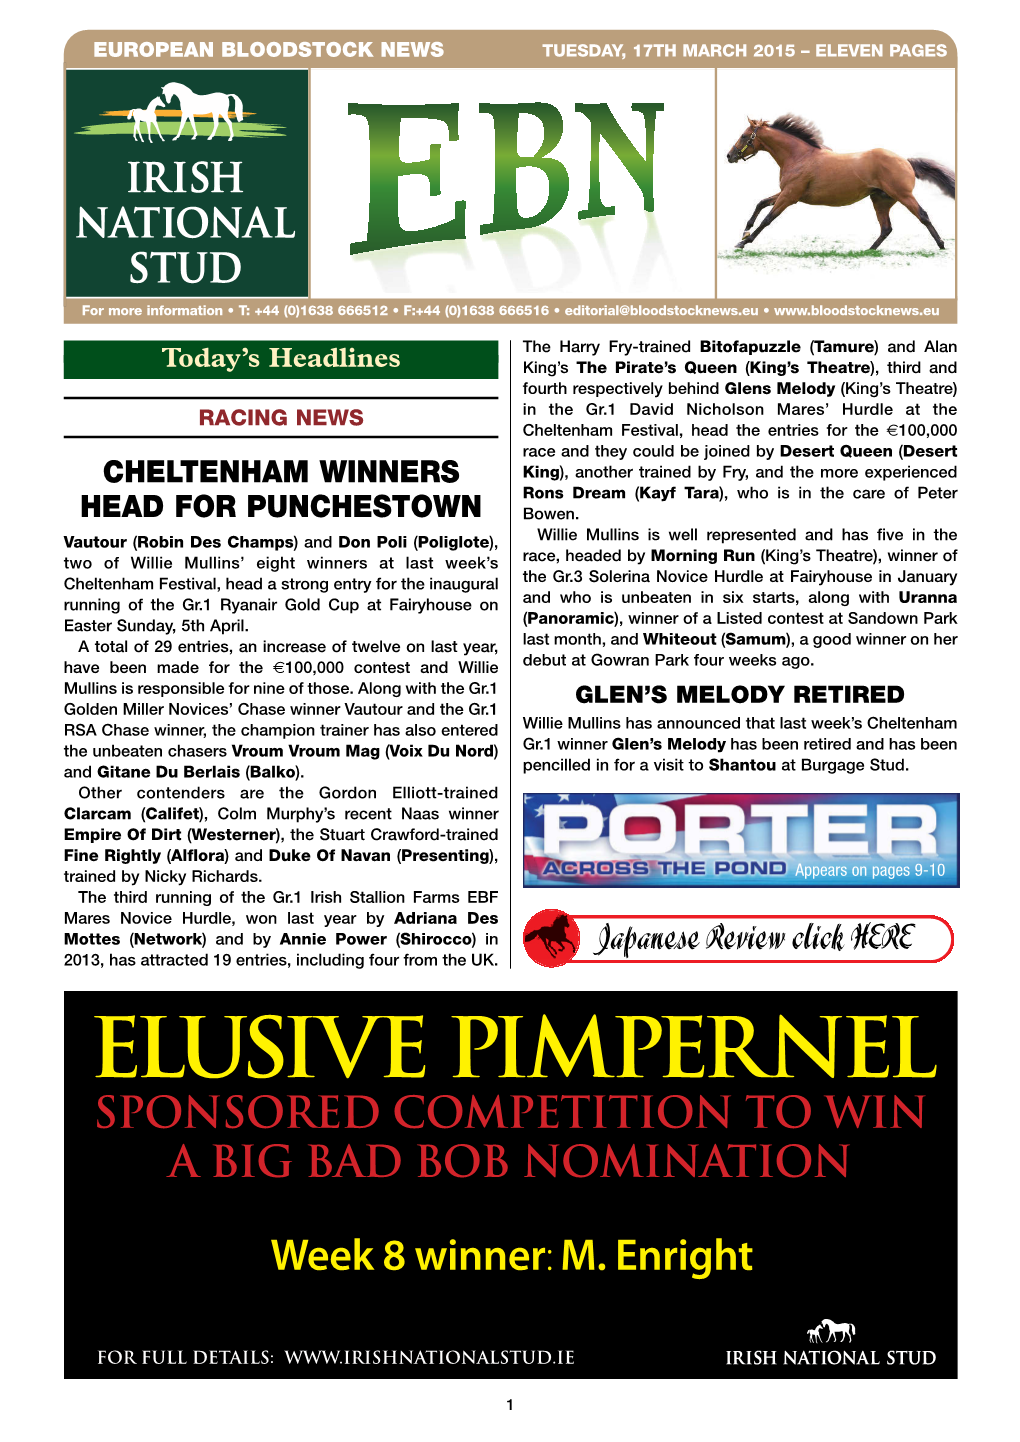 Elusive Pimpernel Sponsored Competition to Win a Big Bad Bob Nomination